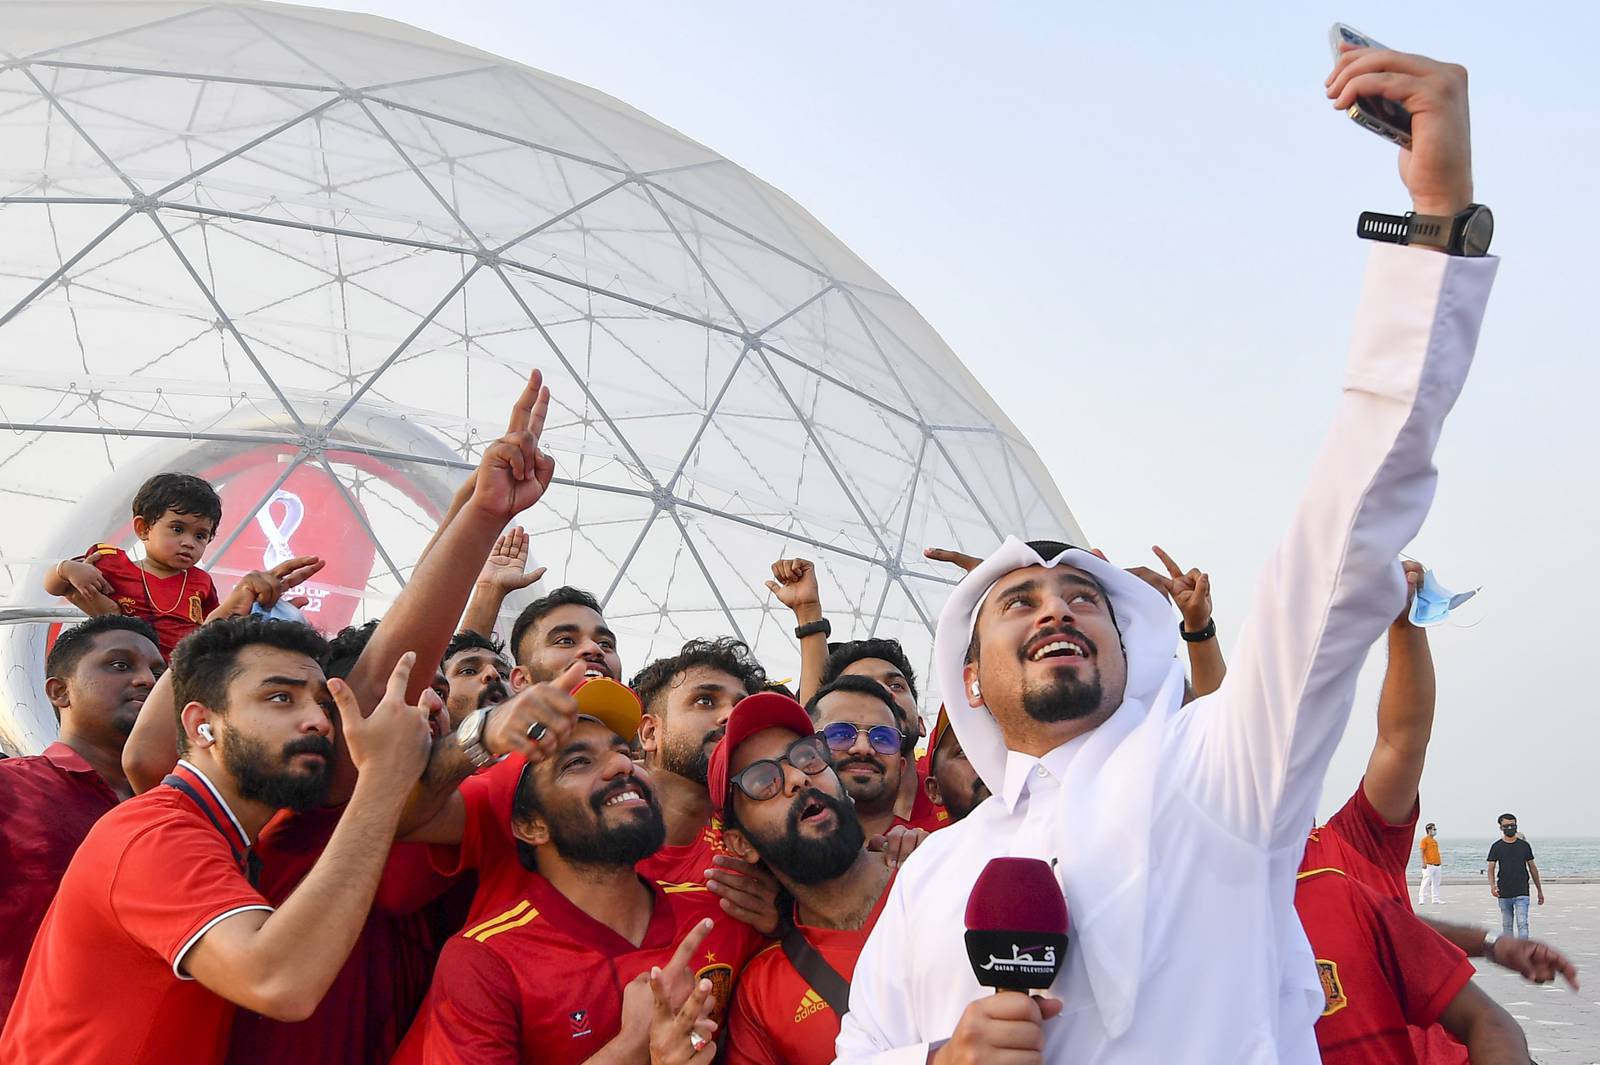 travel insurance qatar world cup